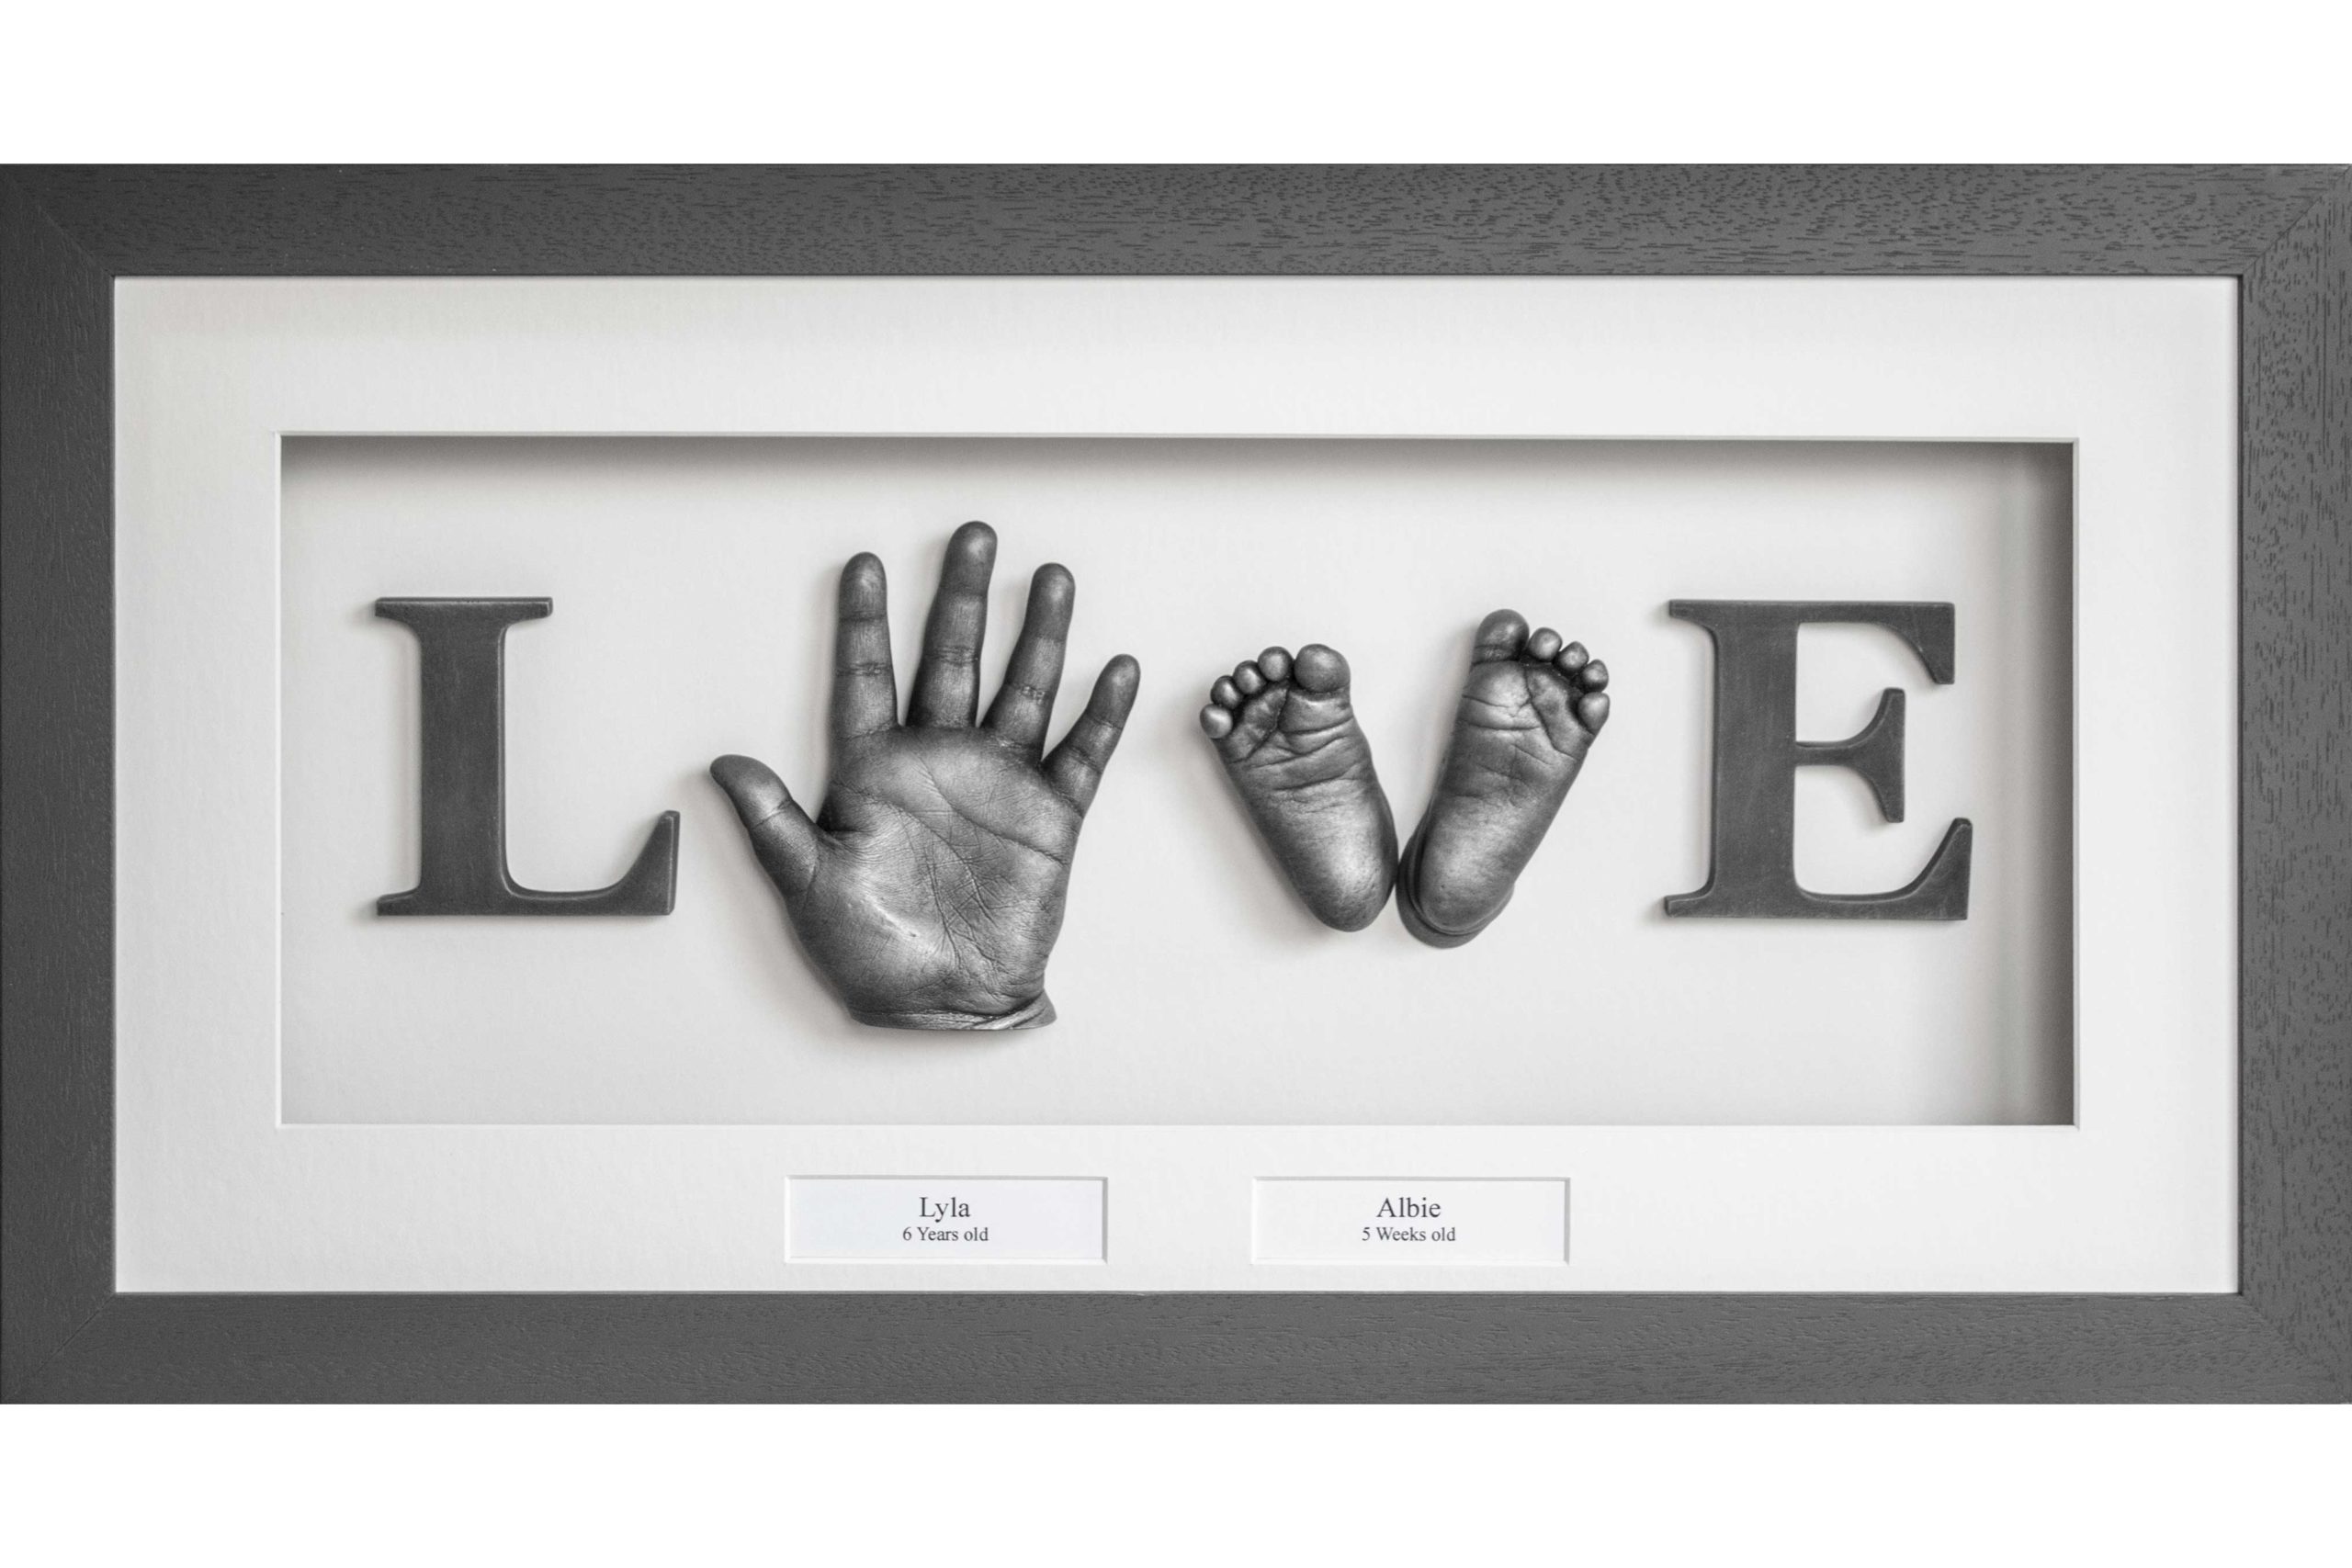 love-frame-3d-lifecast-hand-foot-silver-grey-frame